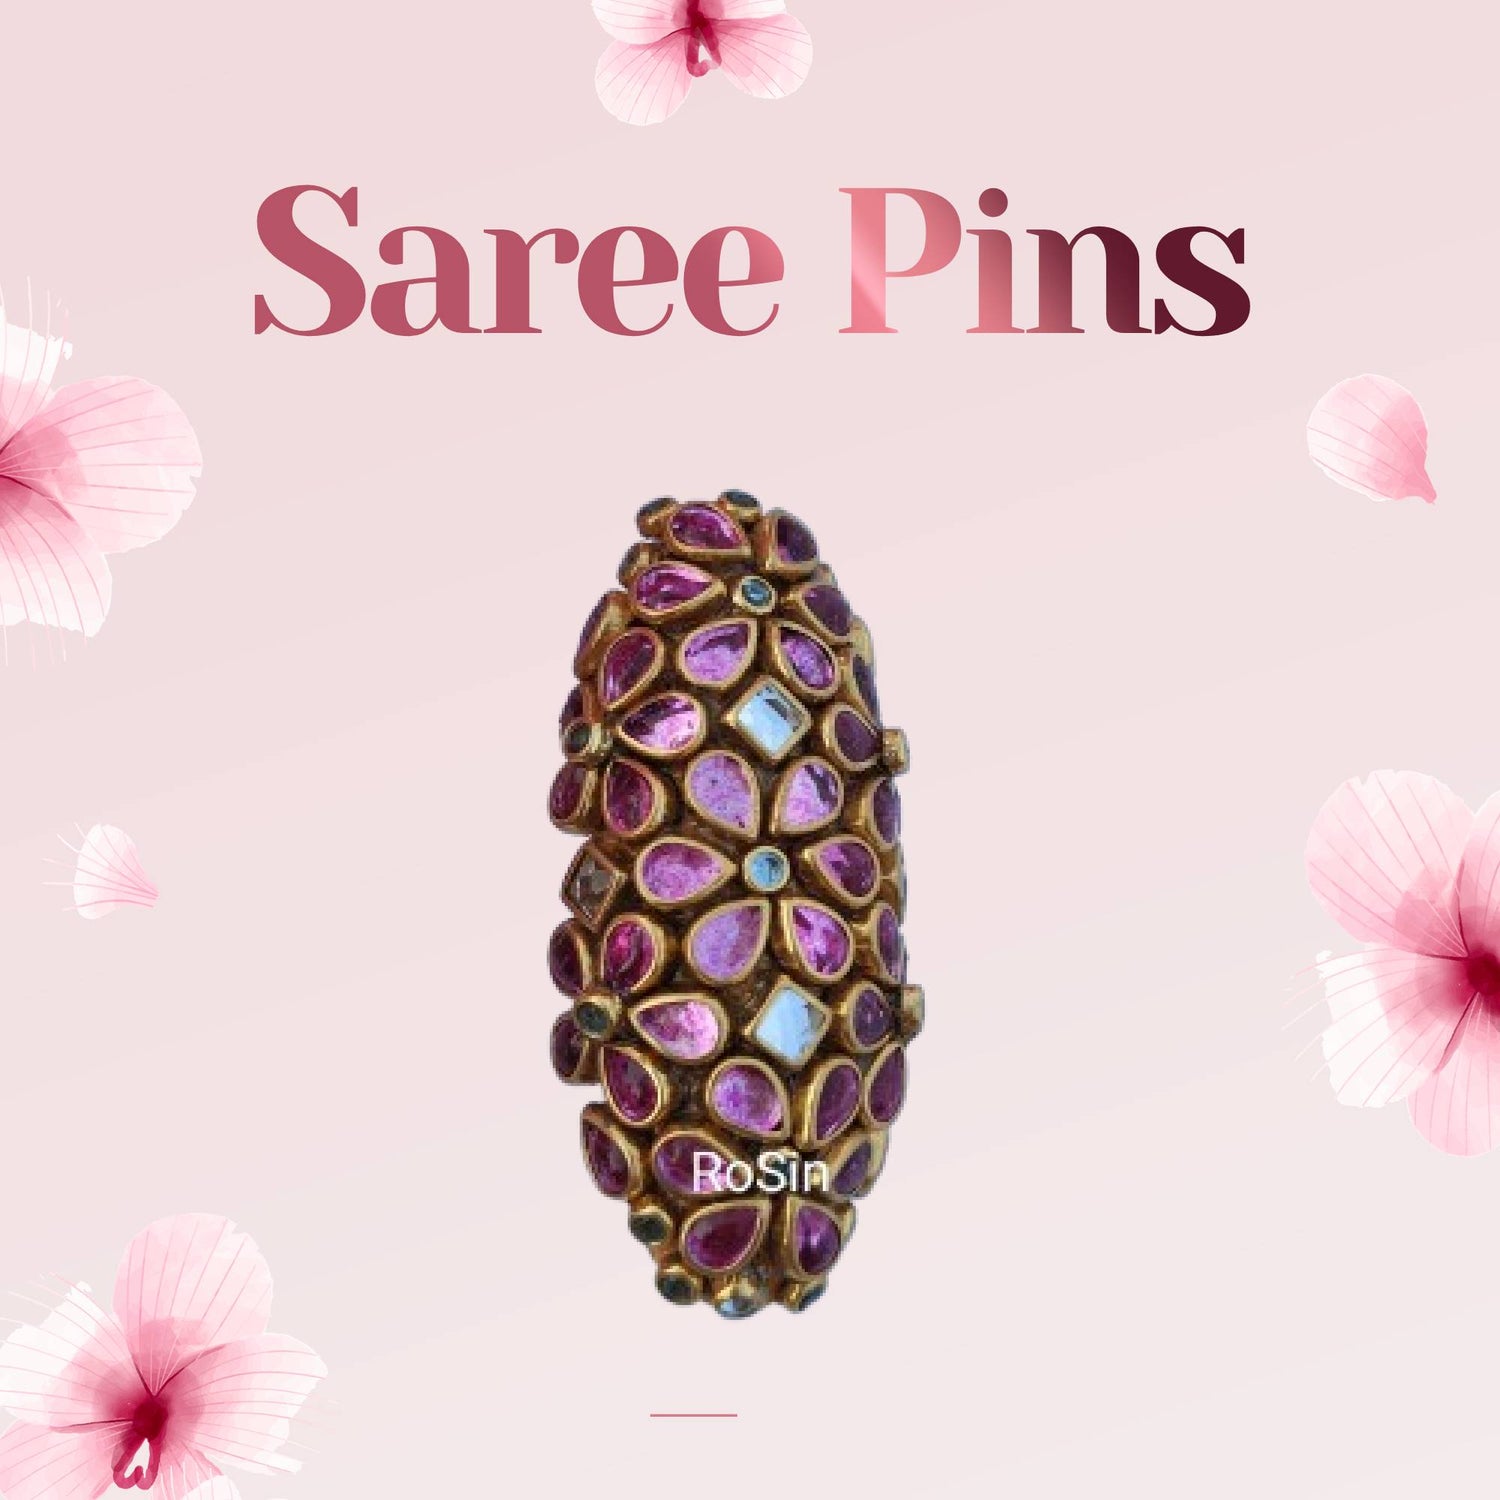 Saree Pins